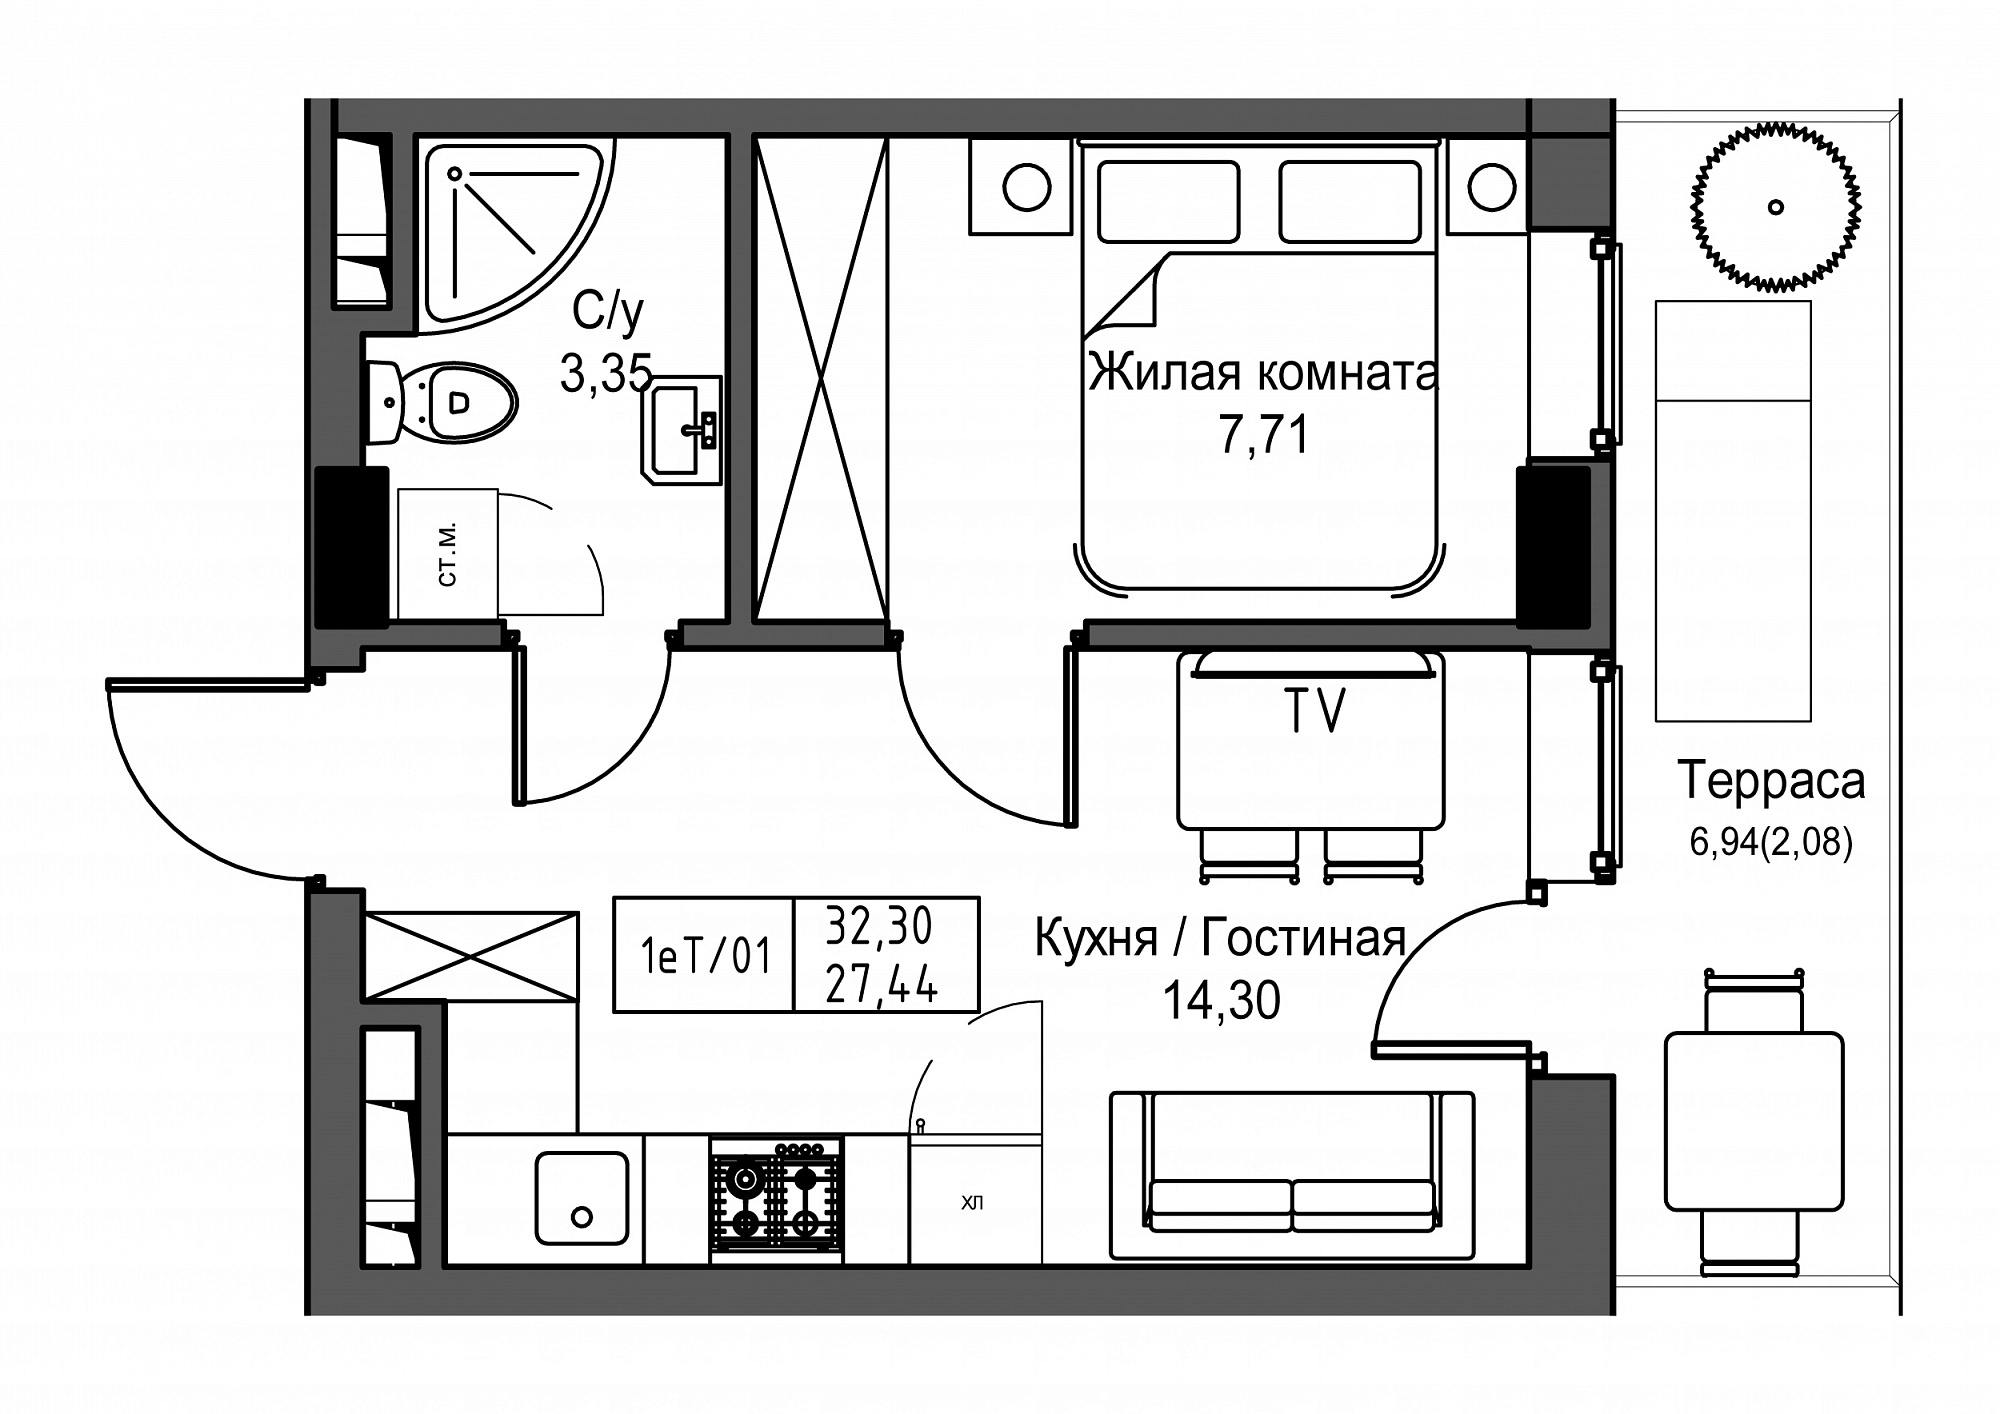 Планування 1-к квартира площею 27.44м2, UM-003-02/0002.